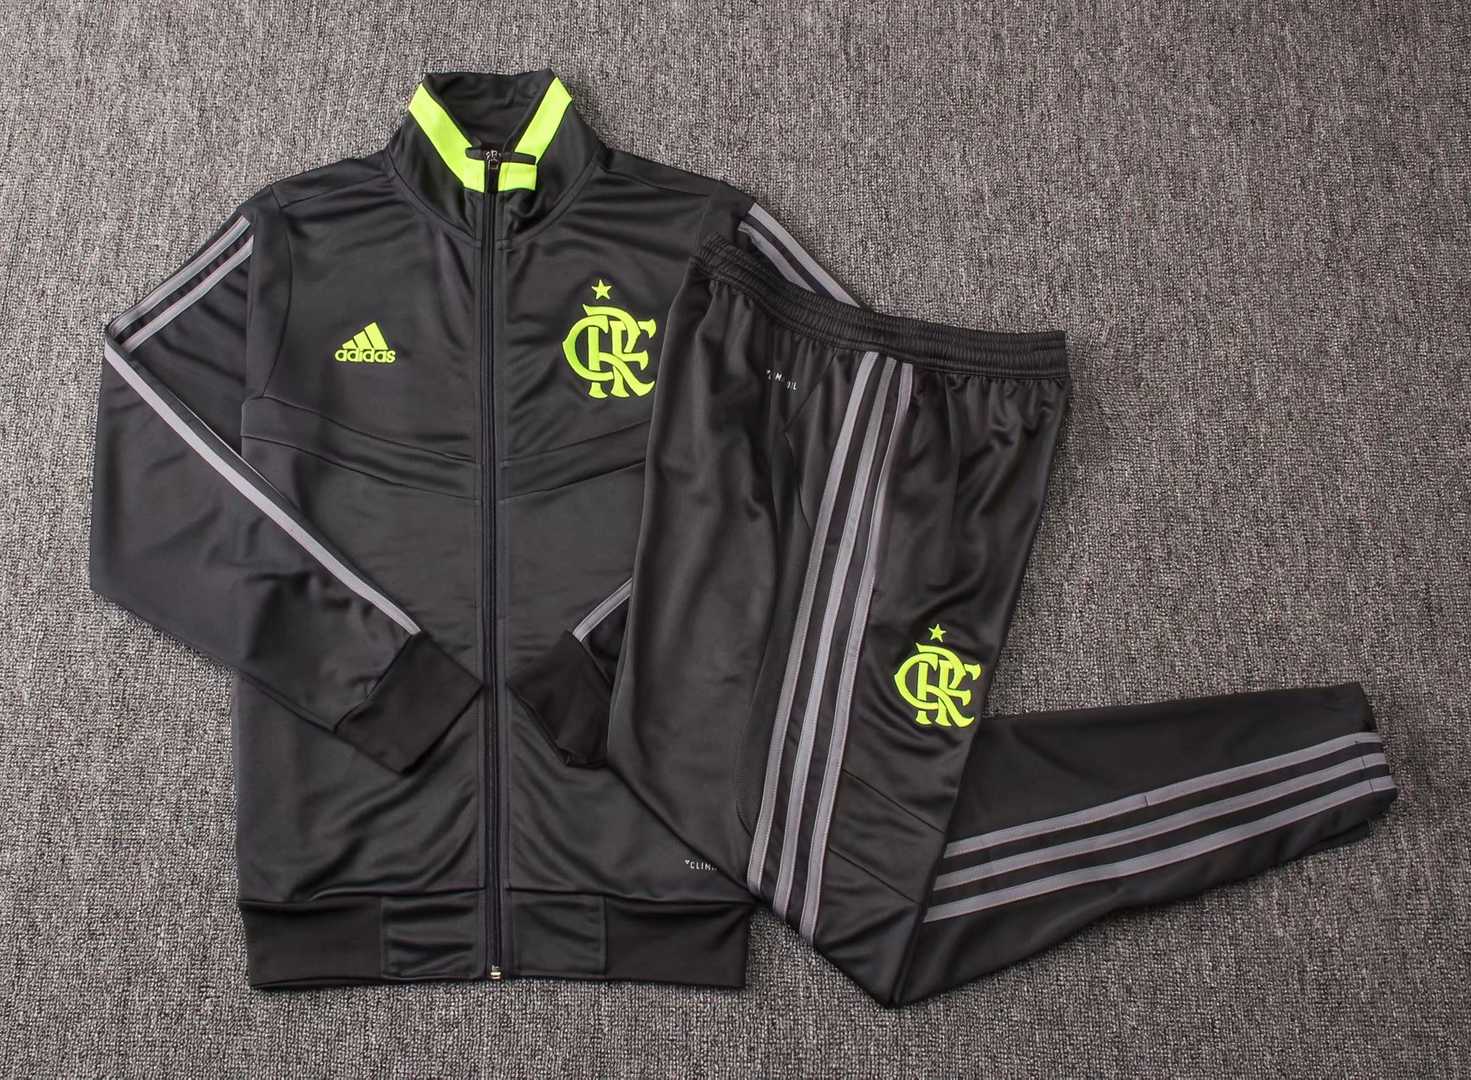 2019/20 Flamengo Deep Grey Mens Soccer Training Suit(Jacket + Pants)